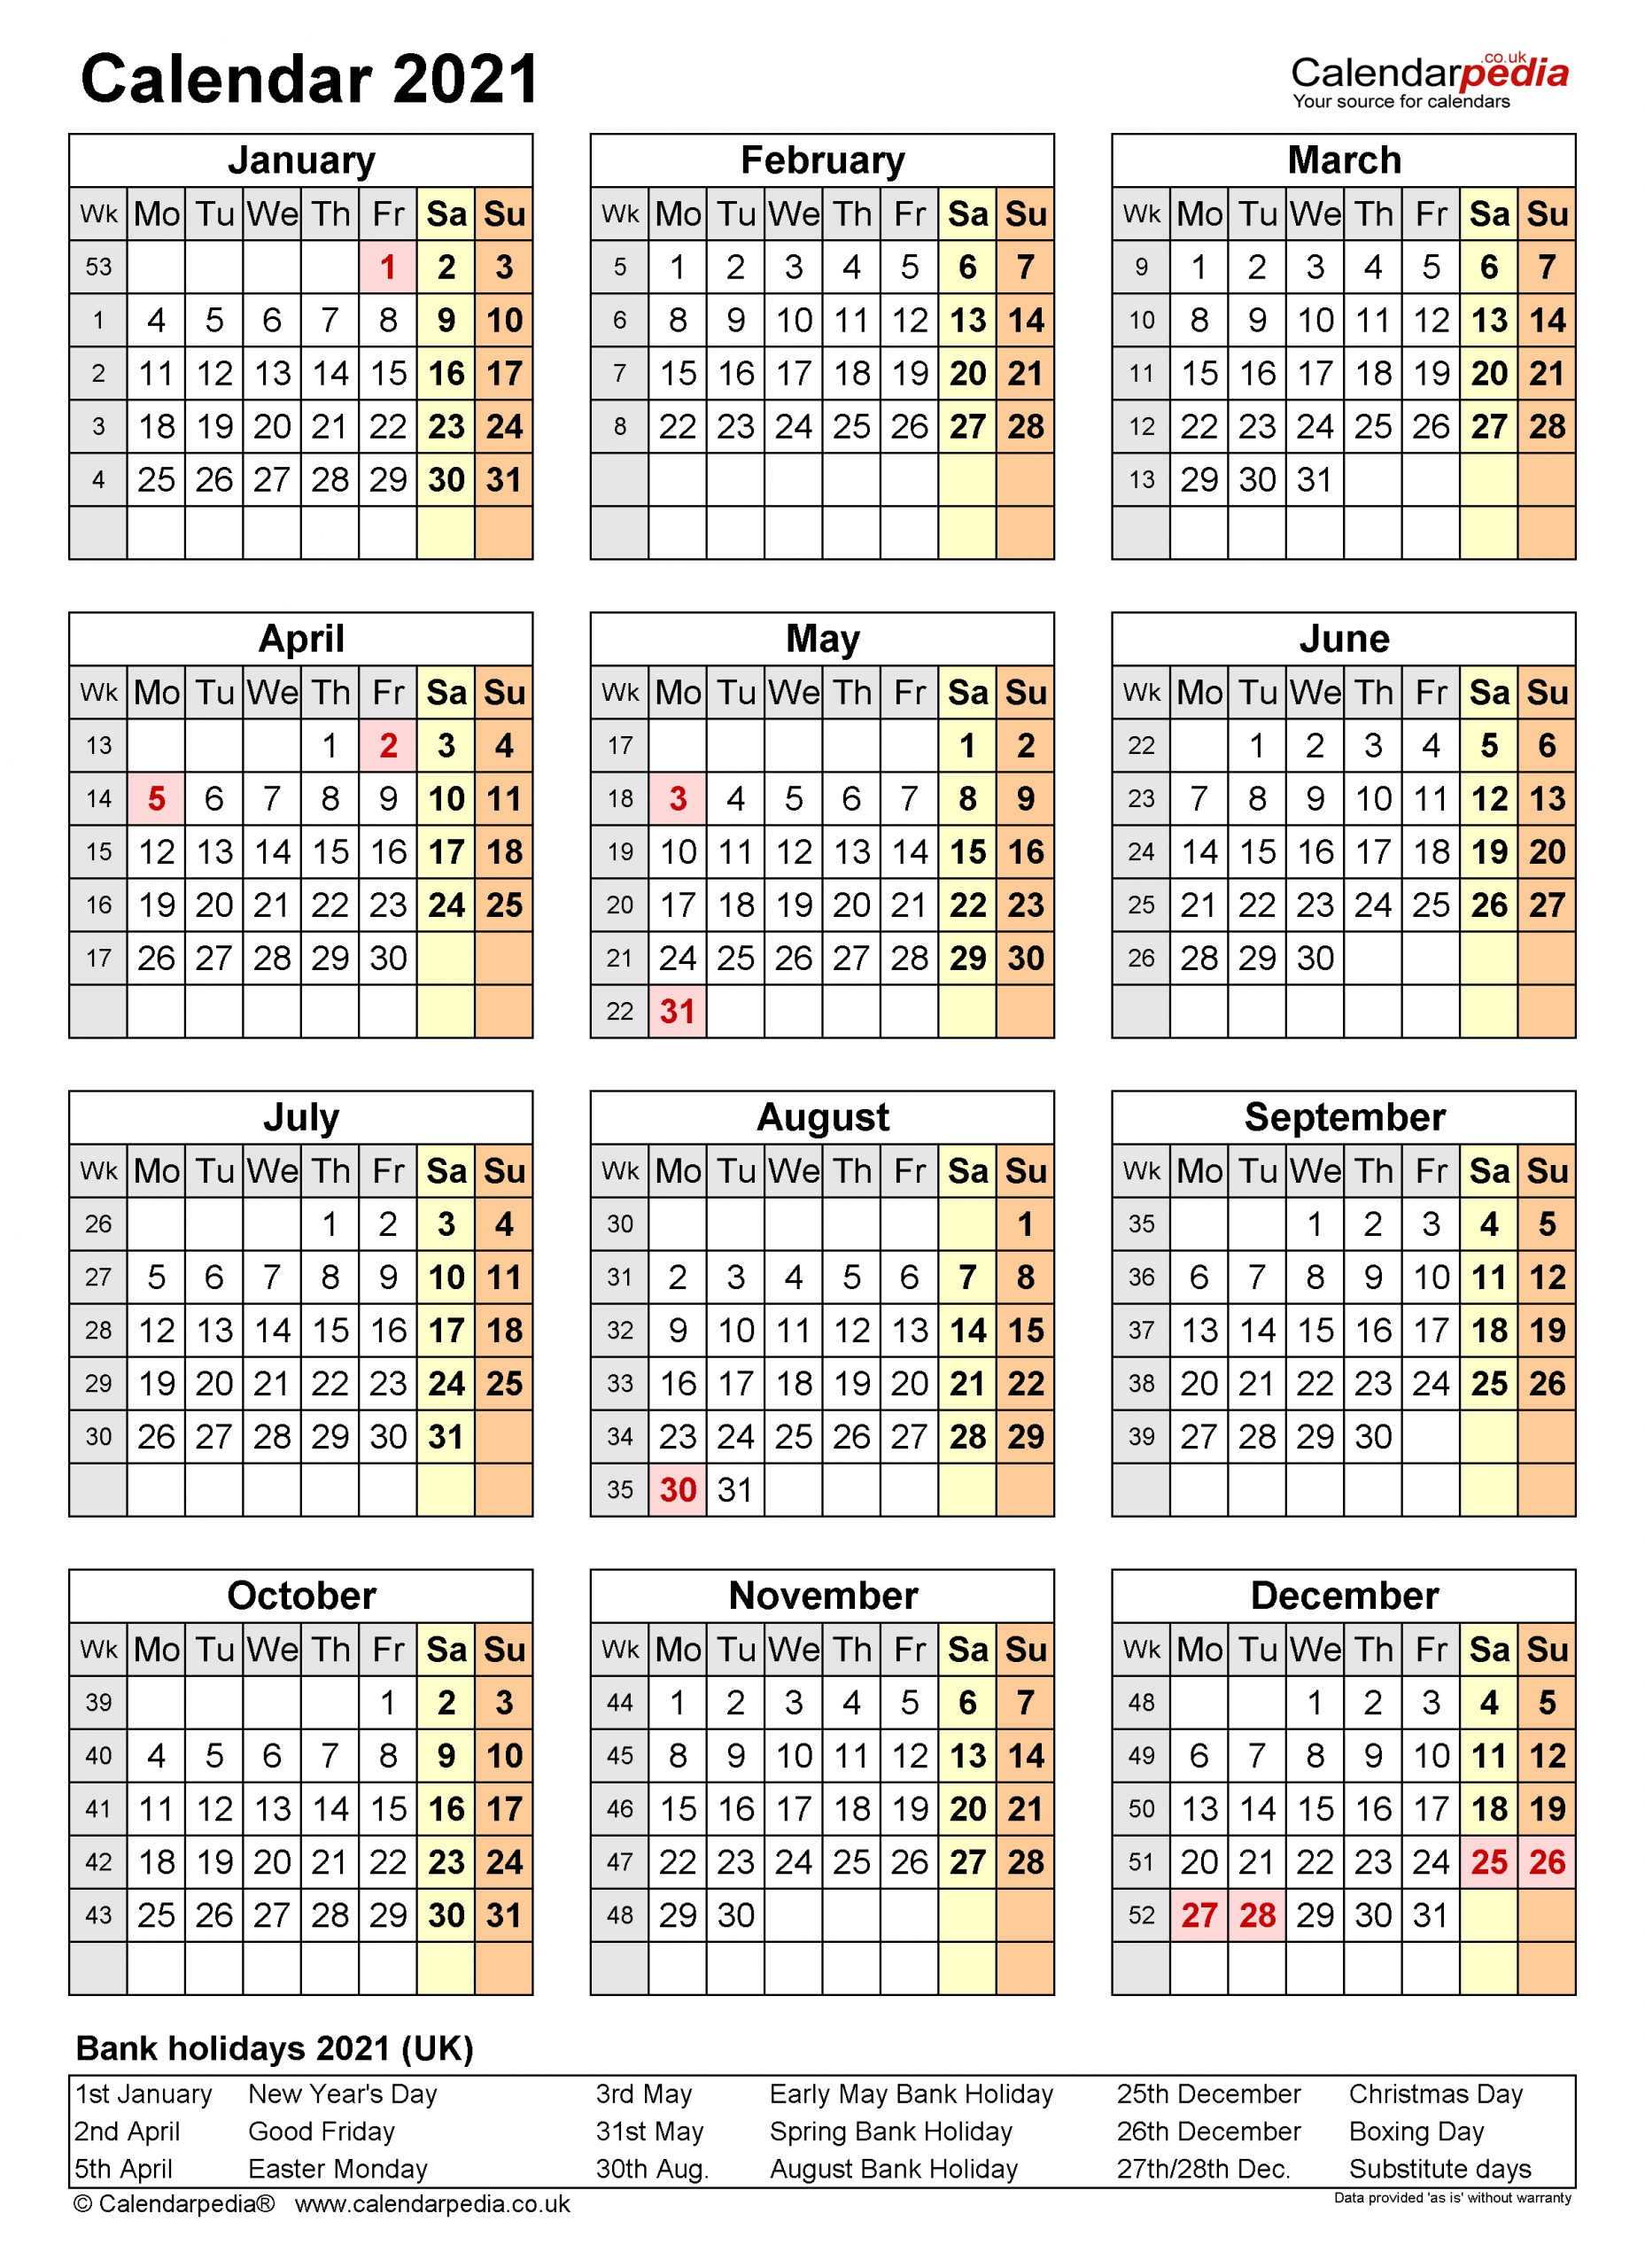 Calendar 2021 (Uk) - Free Printable Pdf Templates-2021 Calendar Printable Free With Bank Holidays